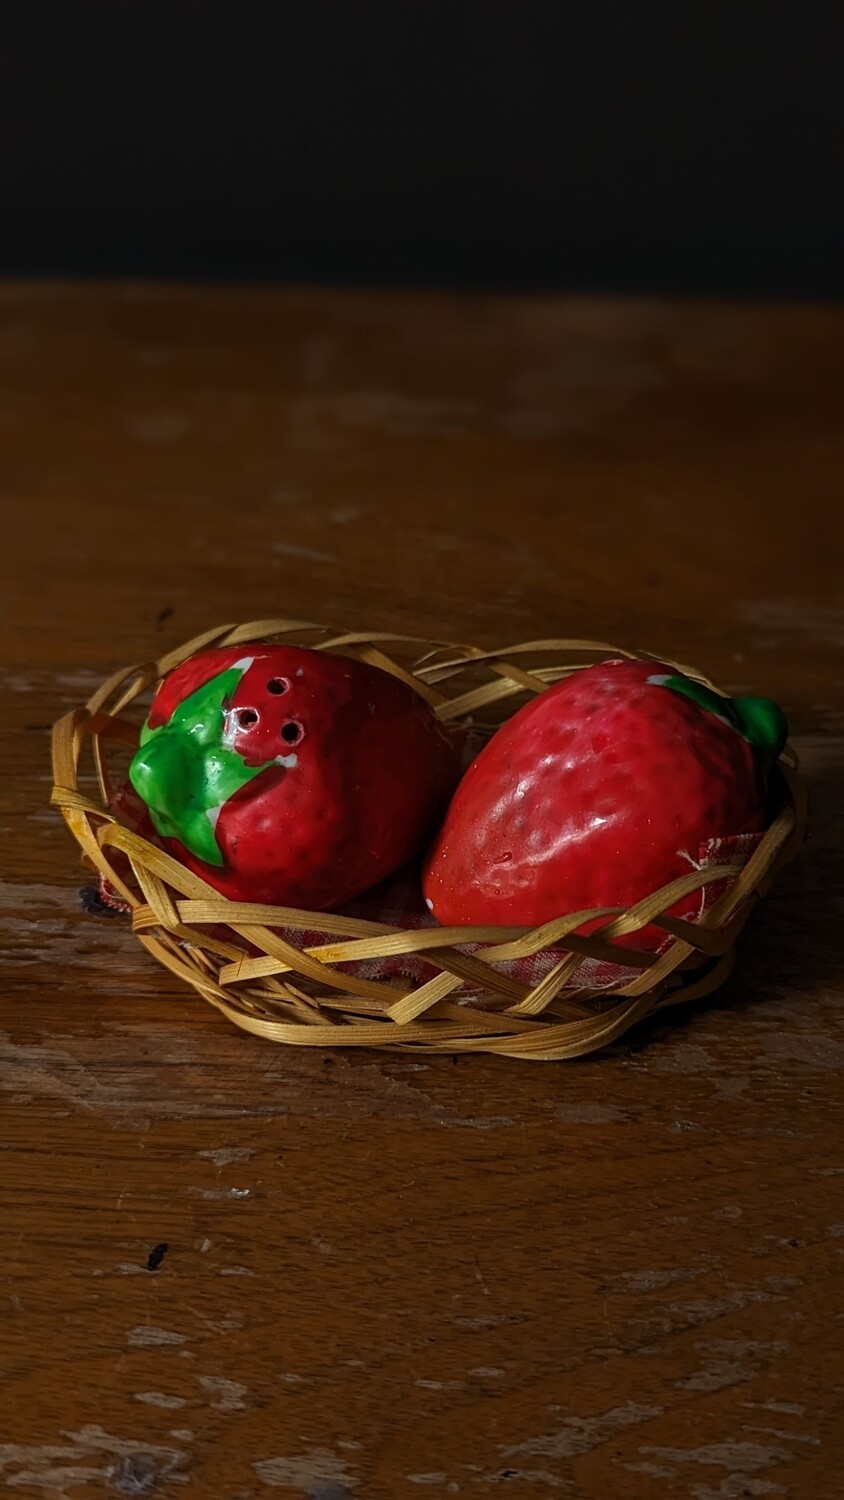 Strawberries in basket salt and pepper shakers